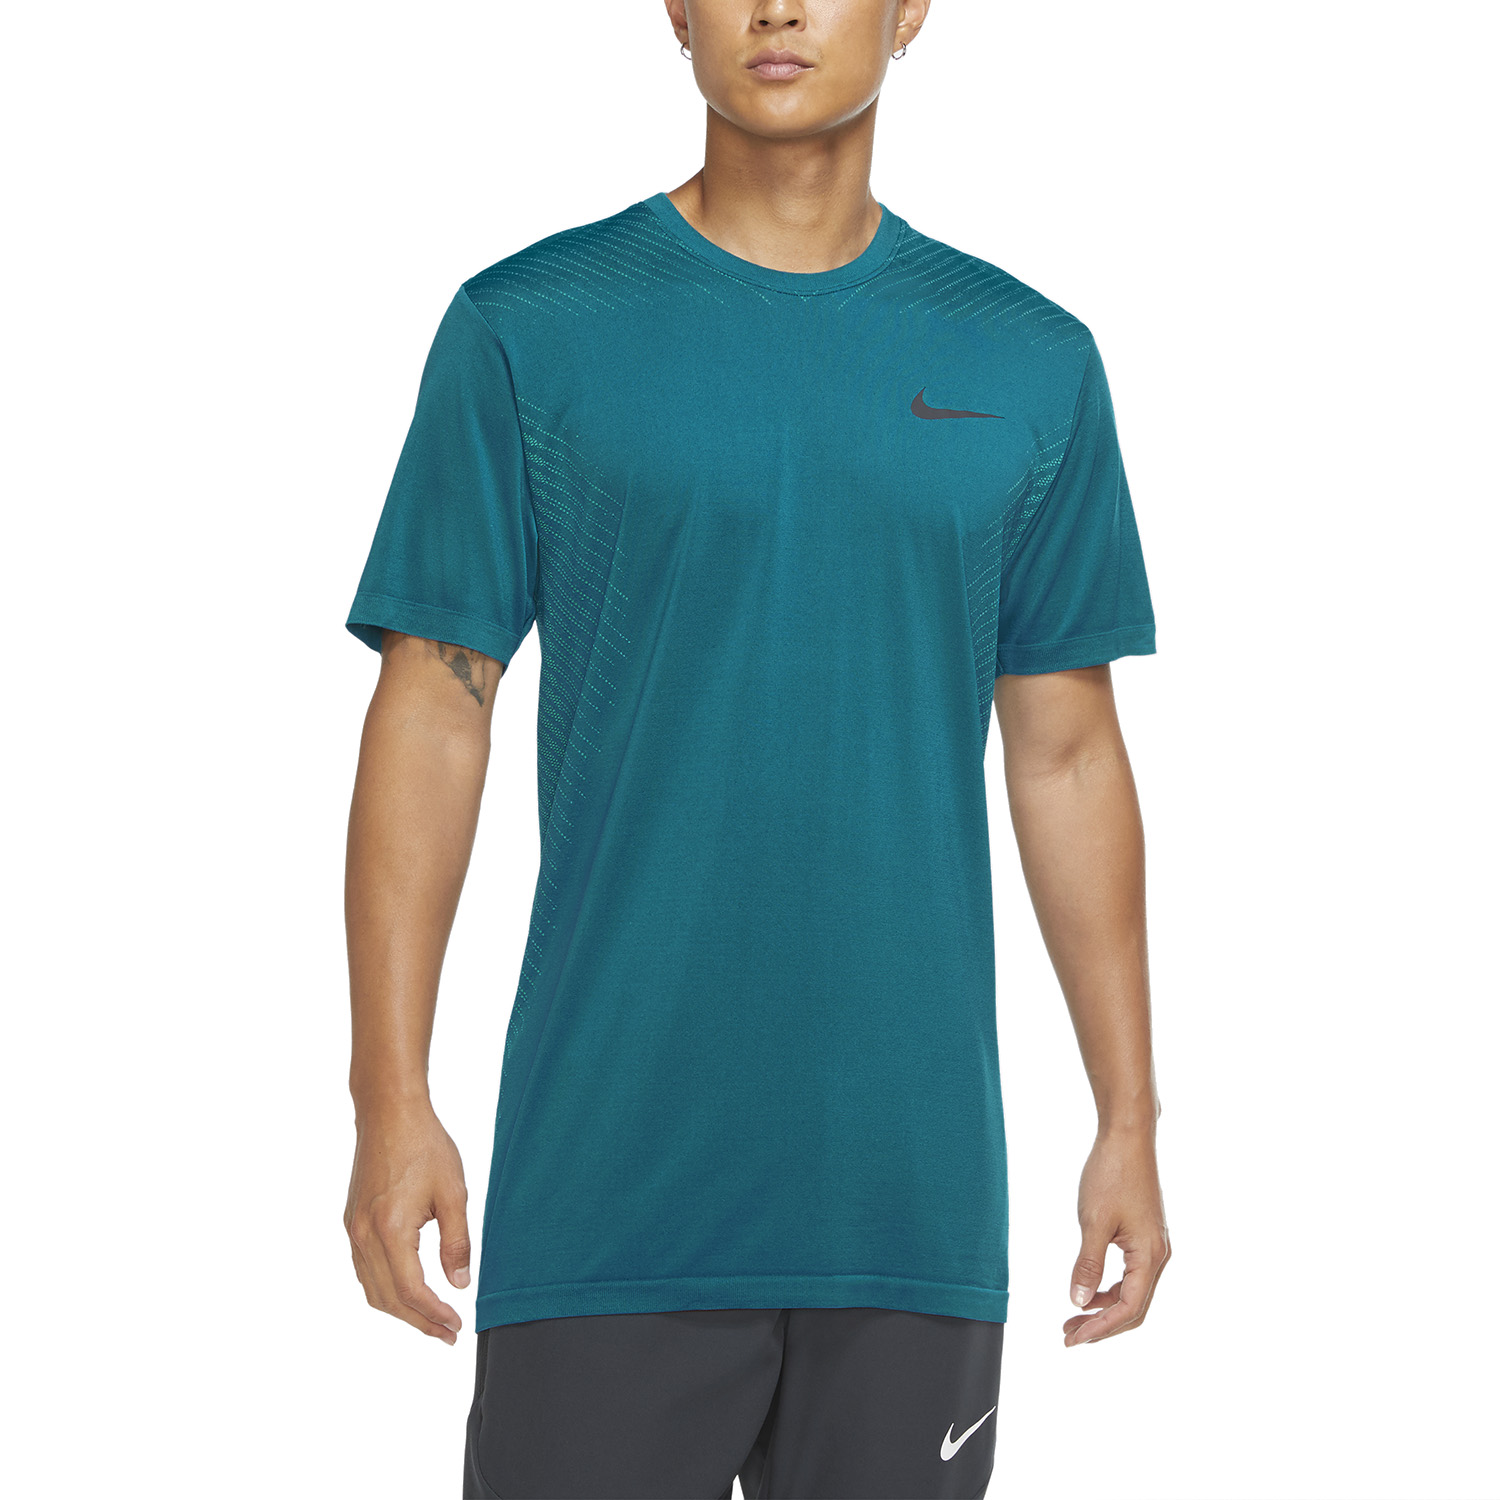 Nike Dri-FIT Classic Men's Training T-Shirt - Bright Spruce